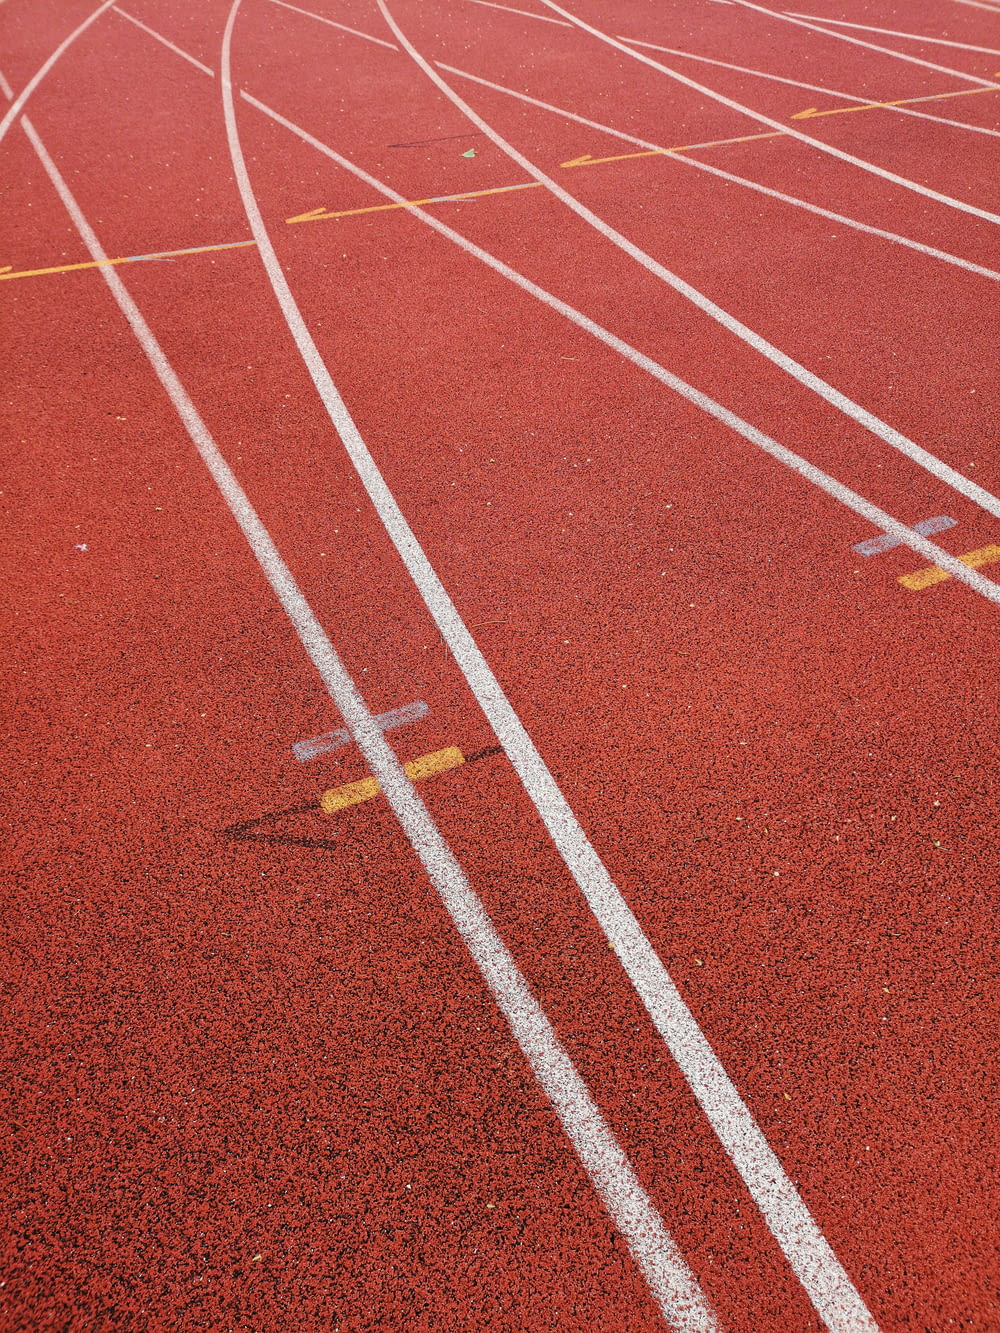 empty runner race track during daytime